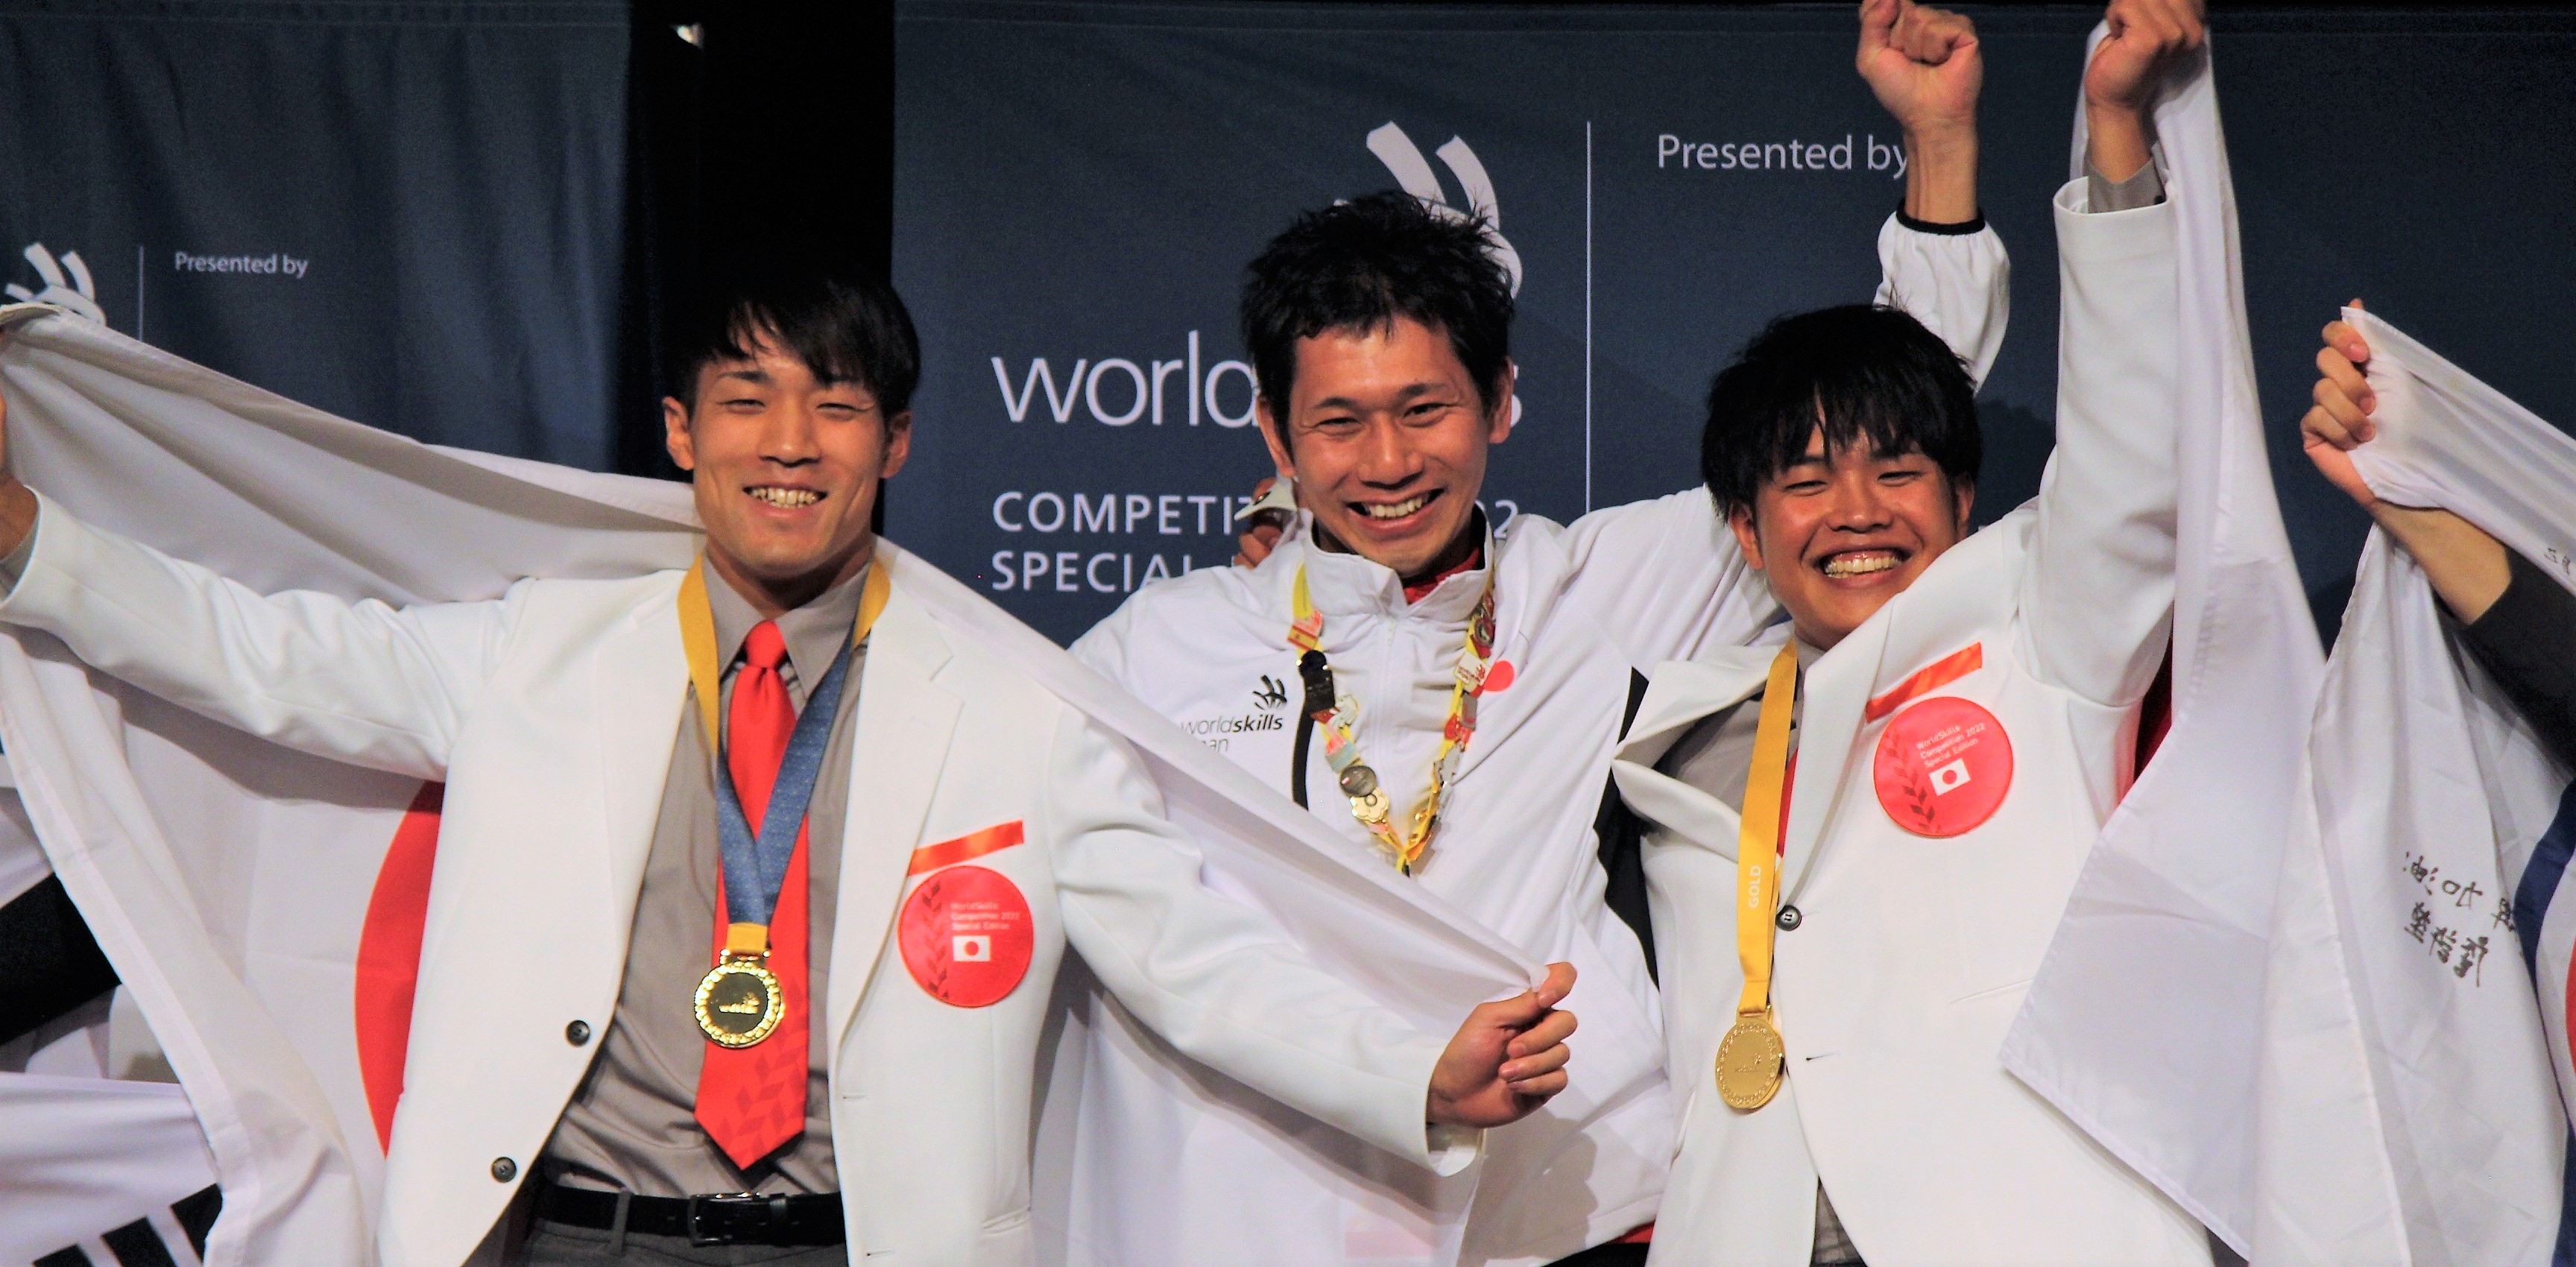 Polishing Skills, Polishing People. AISIN Wins Gold Medal at World Skills Competition